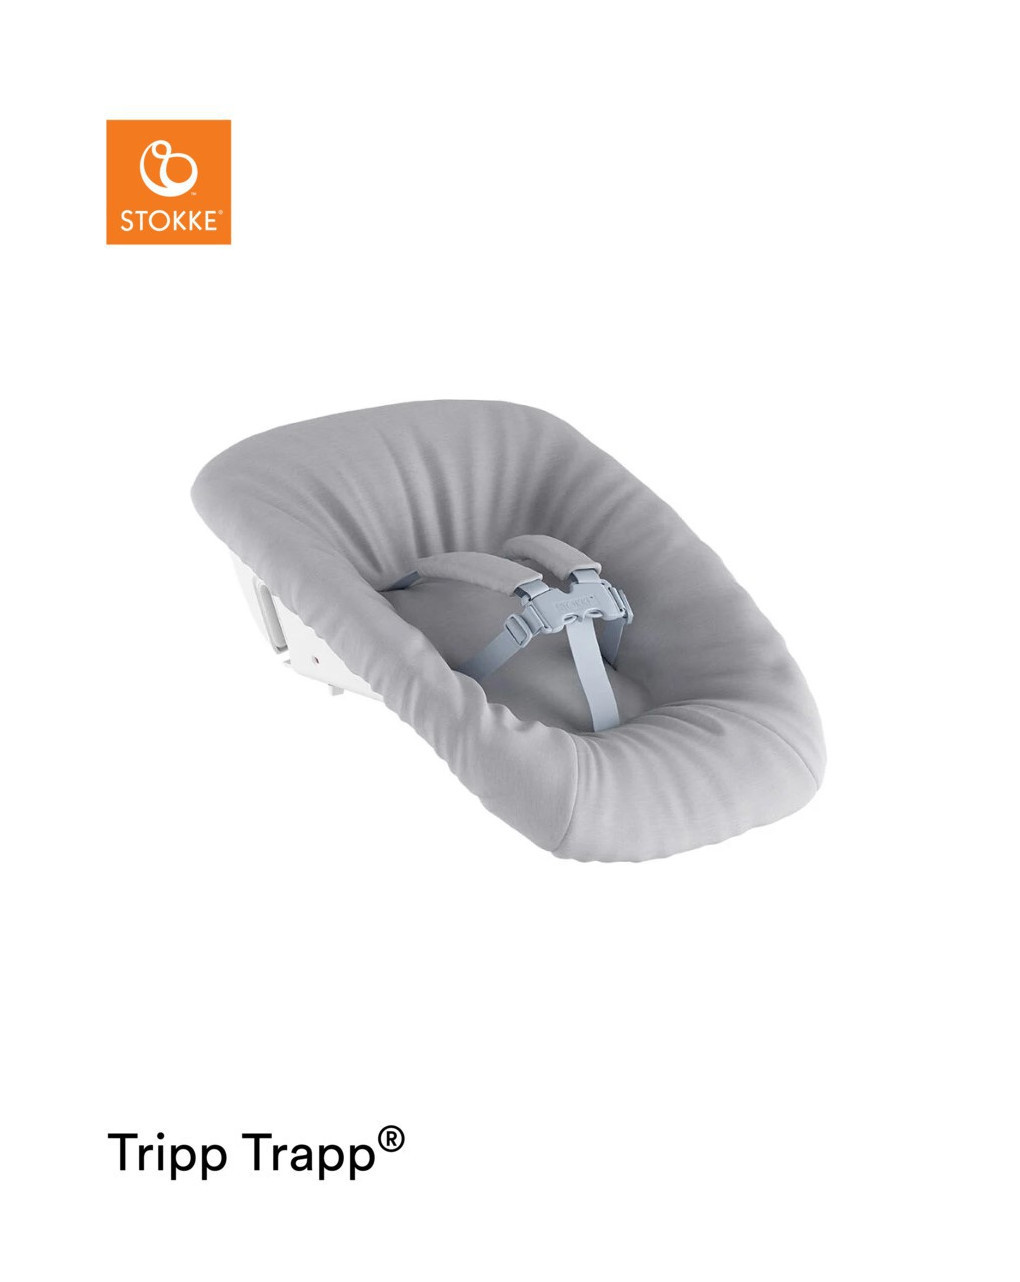 Tripp trapp® newborn set con gancio appendigiochi  - grey - Stokke